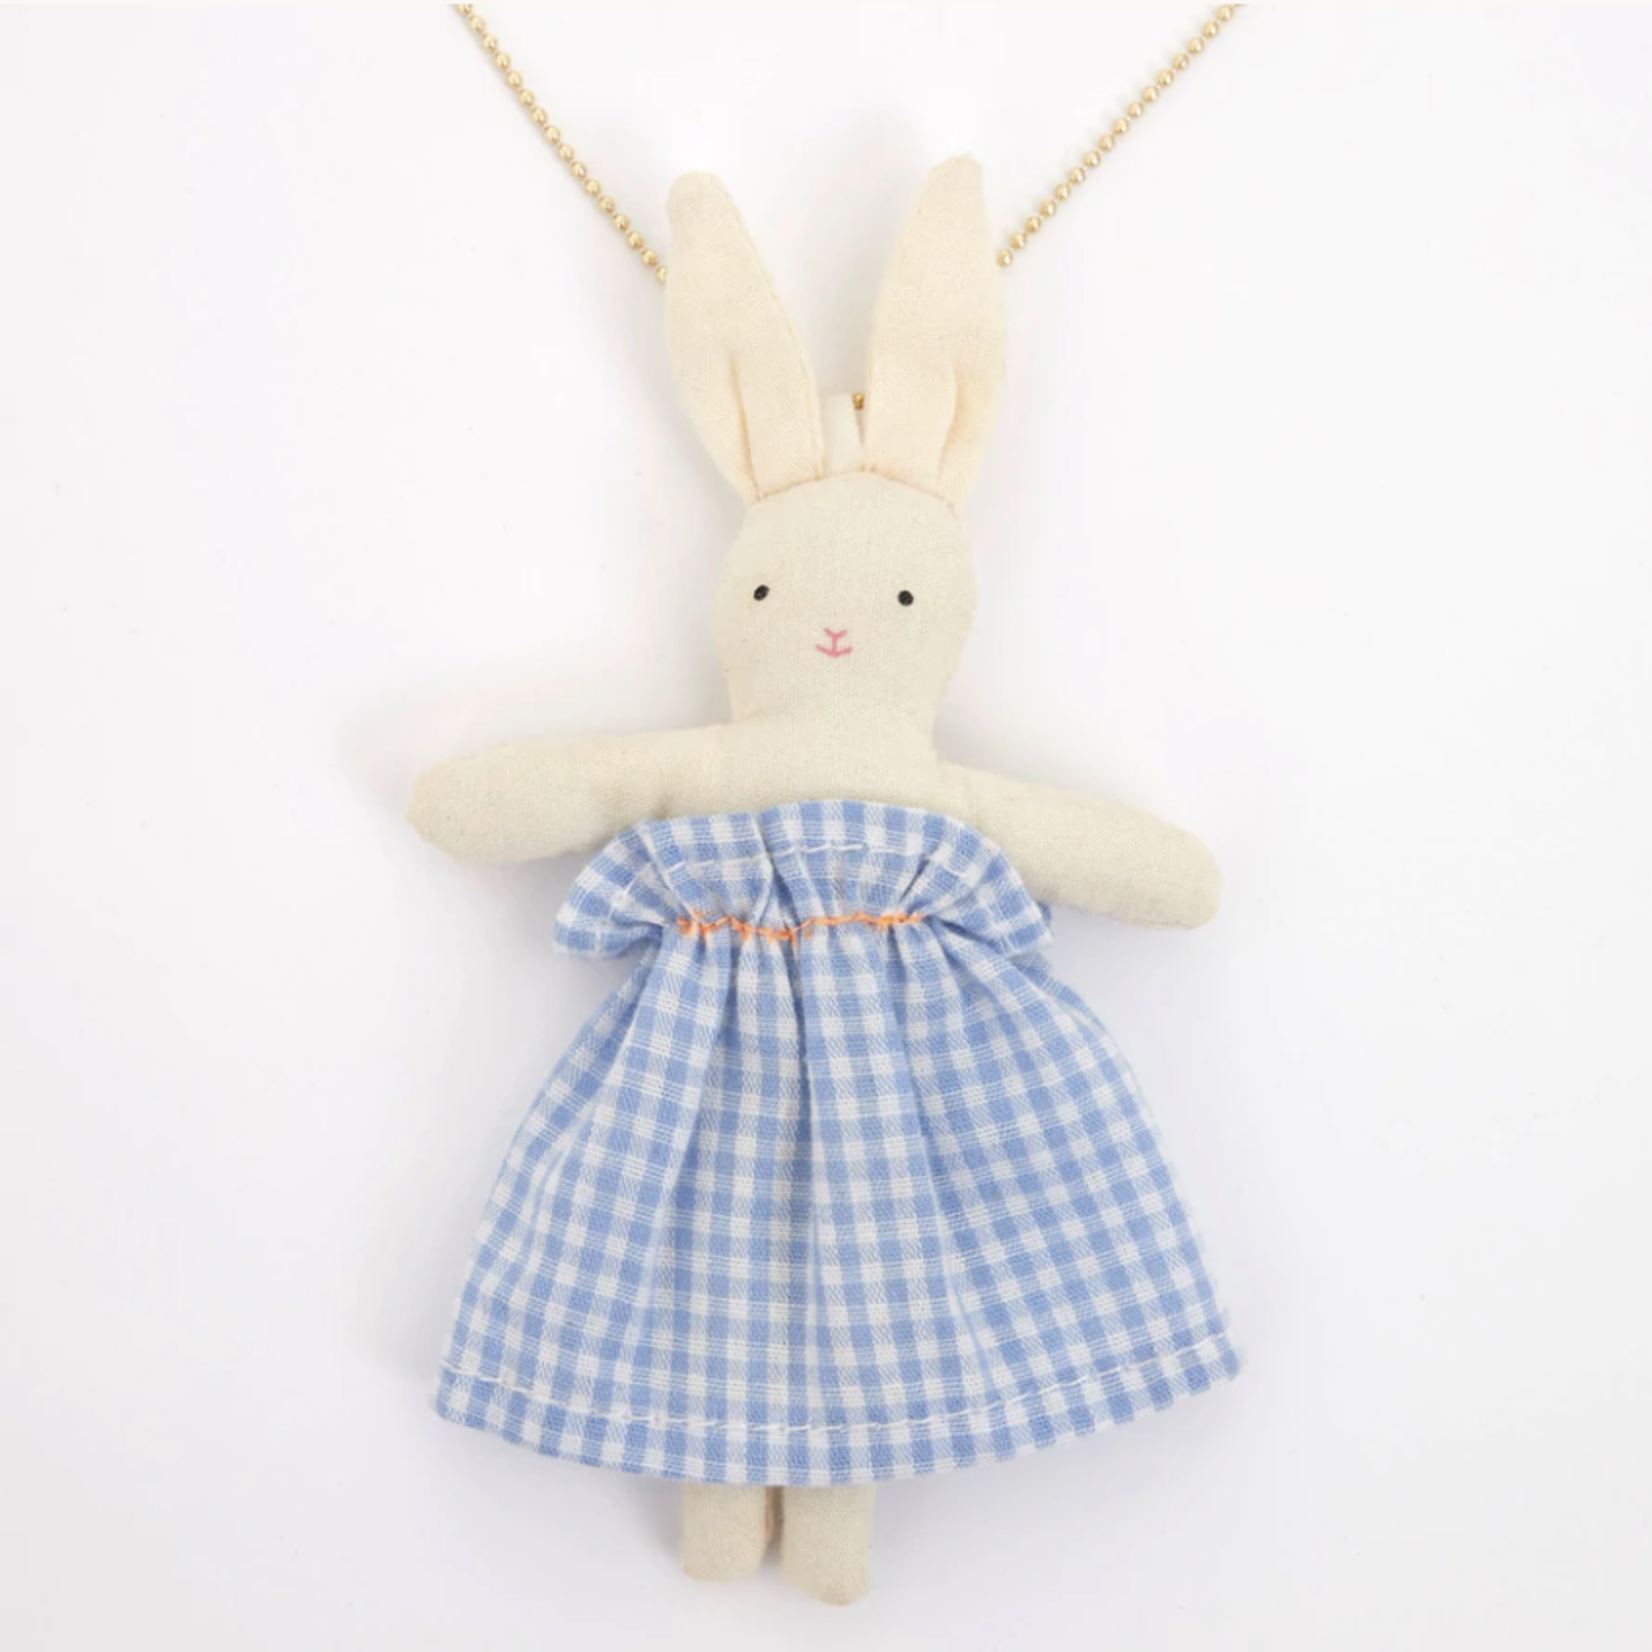 Meri Meri Bunny Doll Necklace